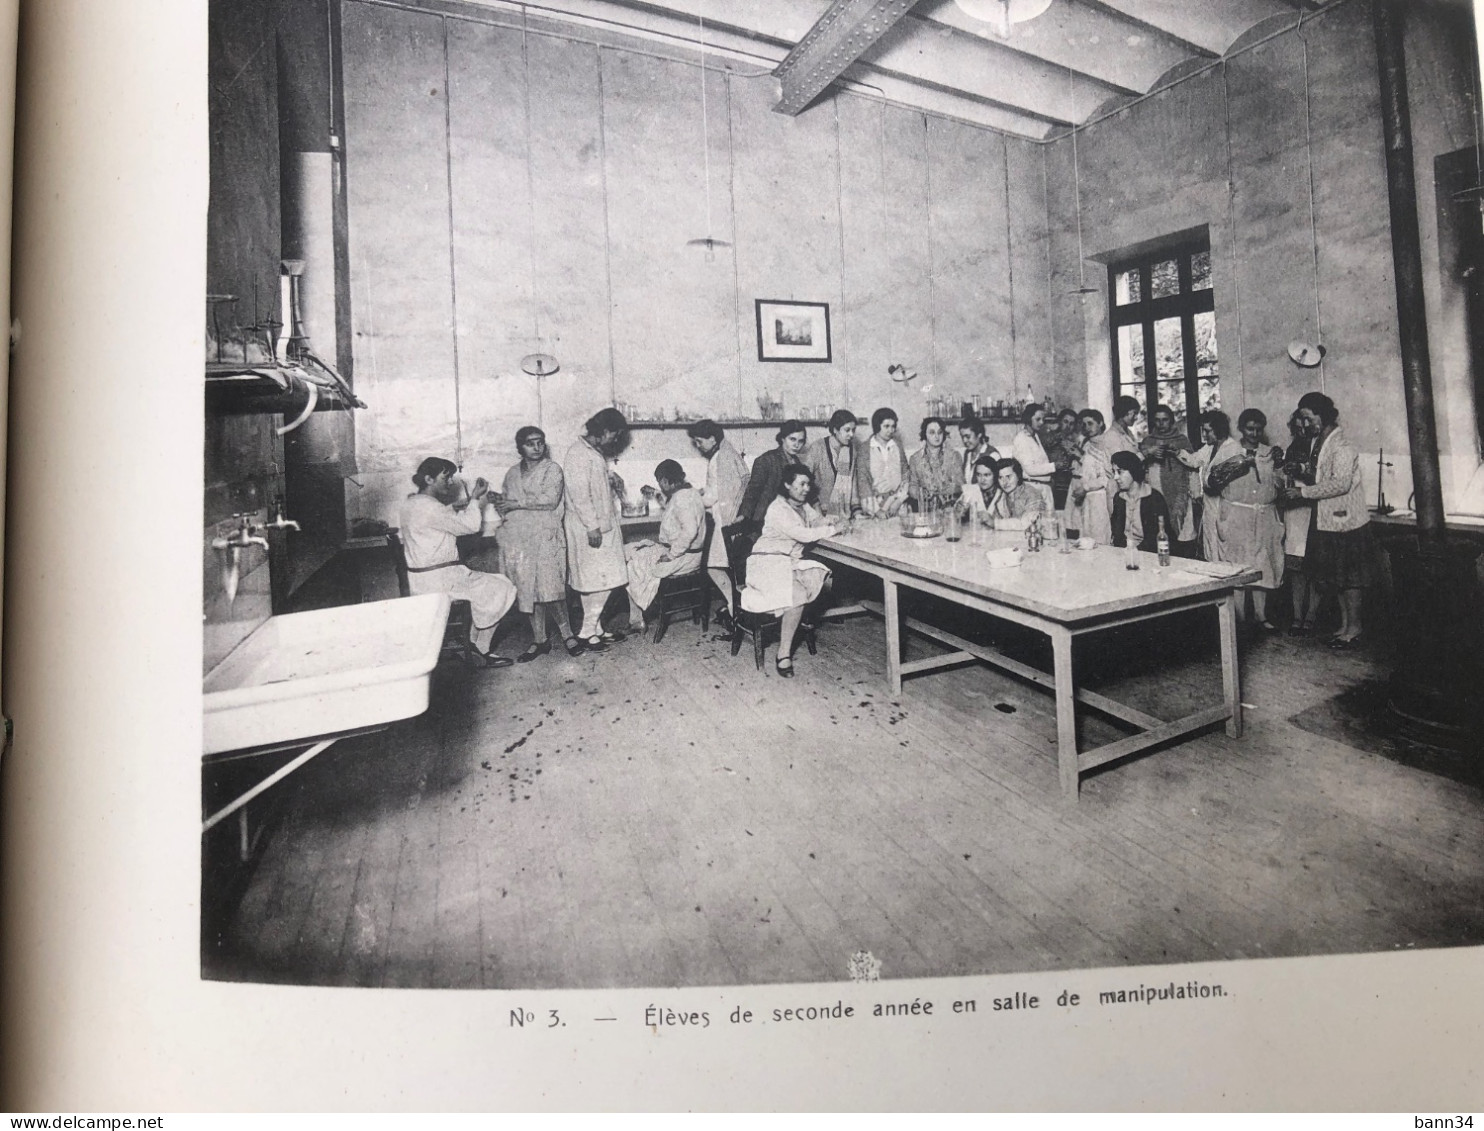 Livret photos 1929 ecole normale institutrice nimes gard